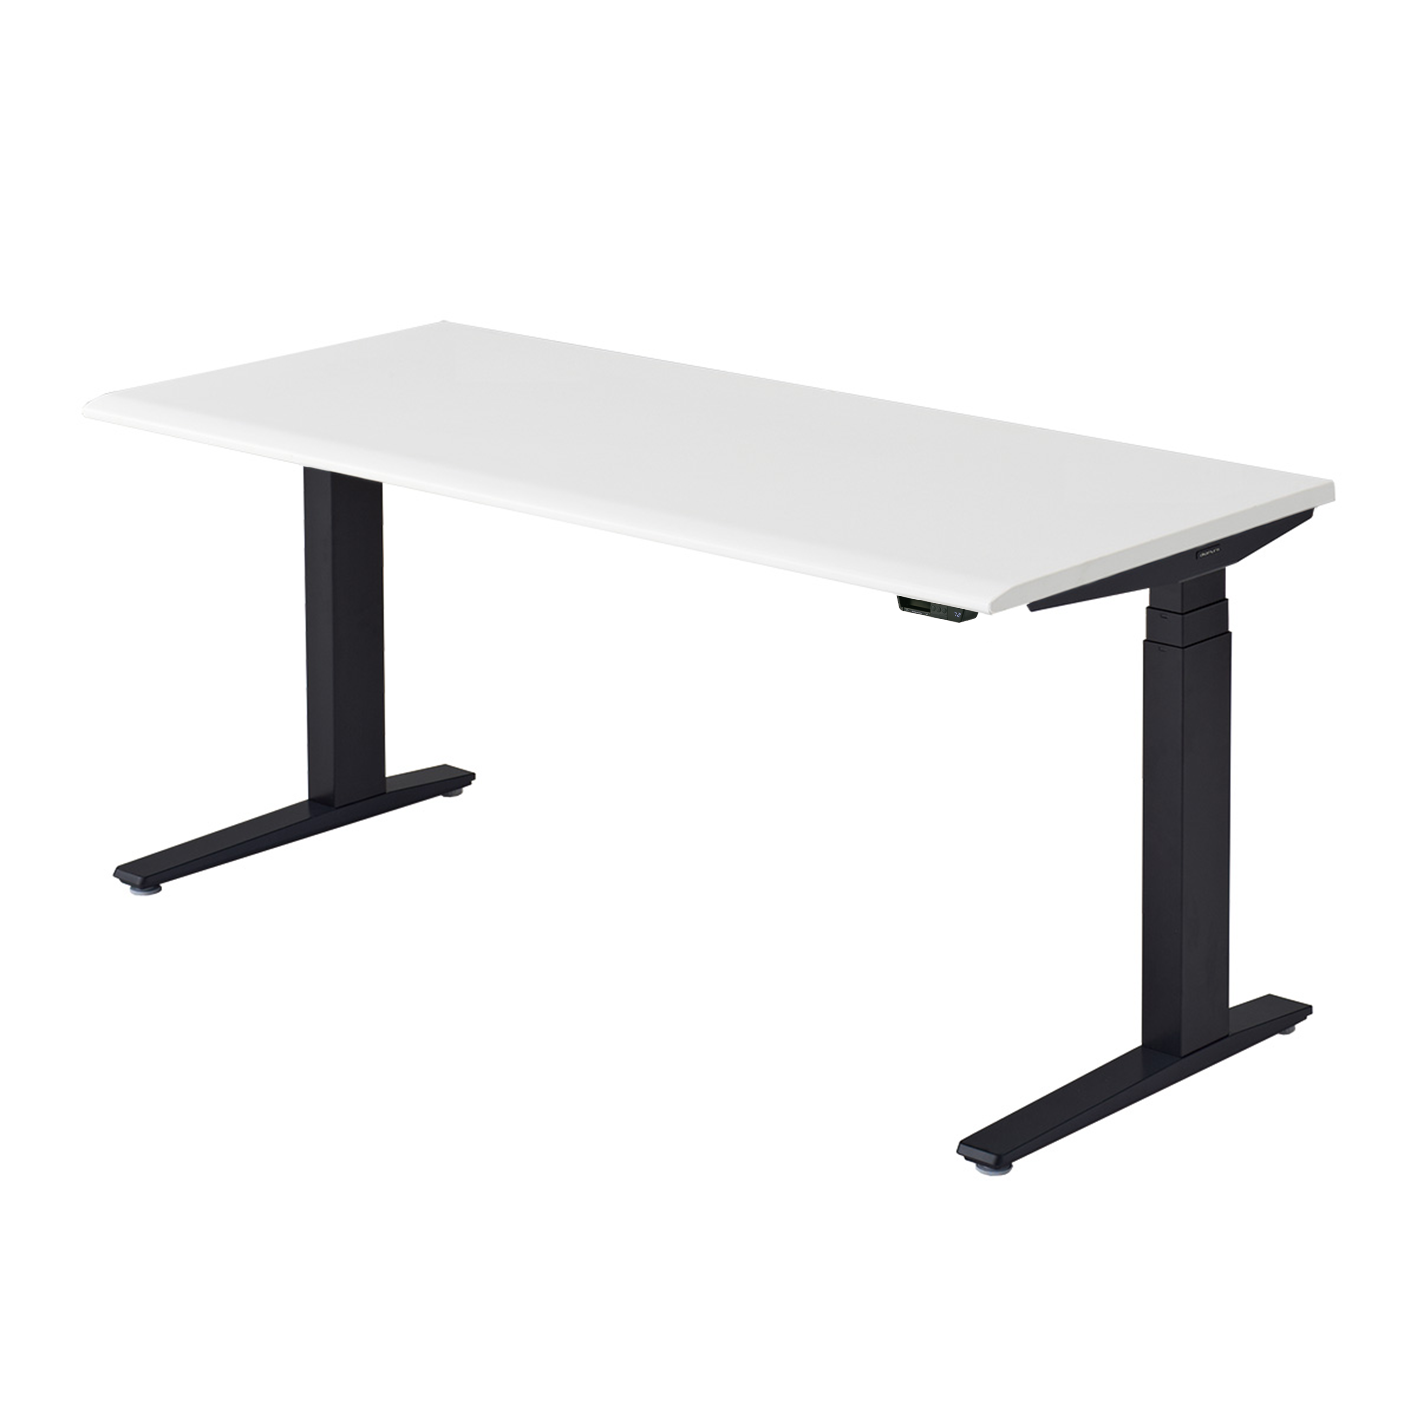 Okamura height adjustable table in white